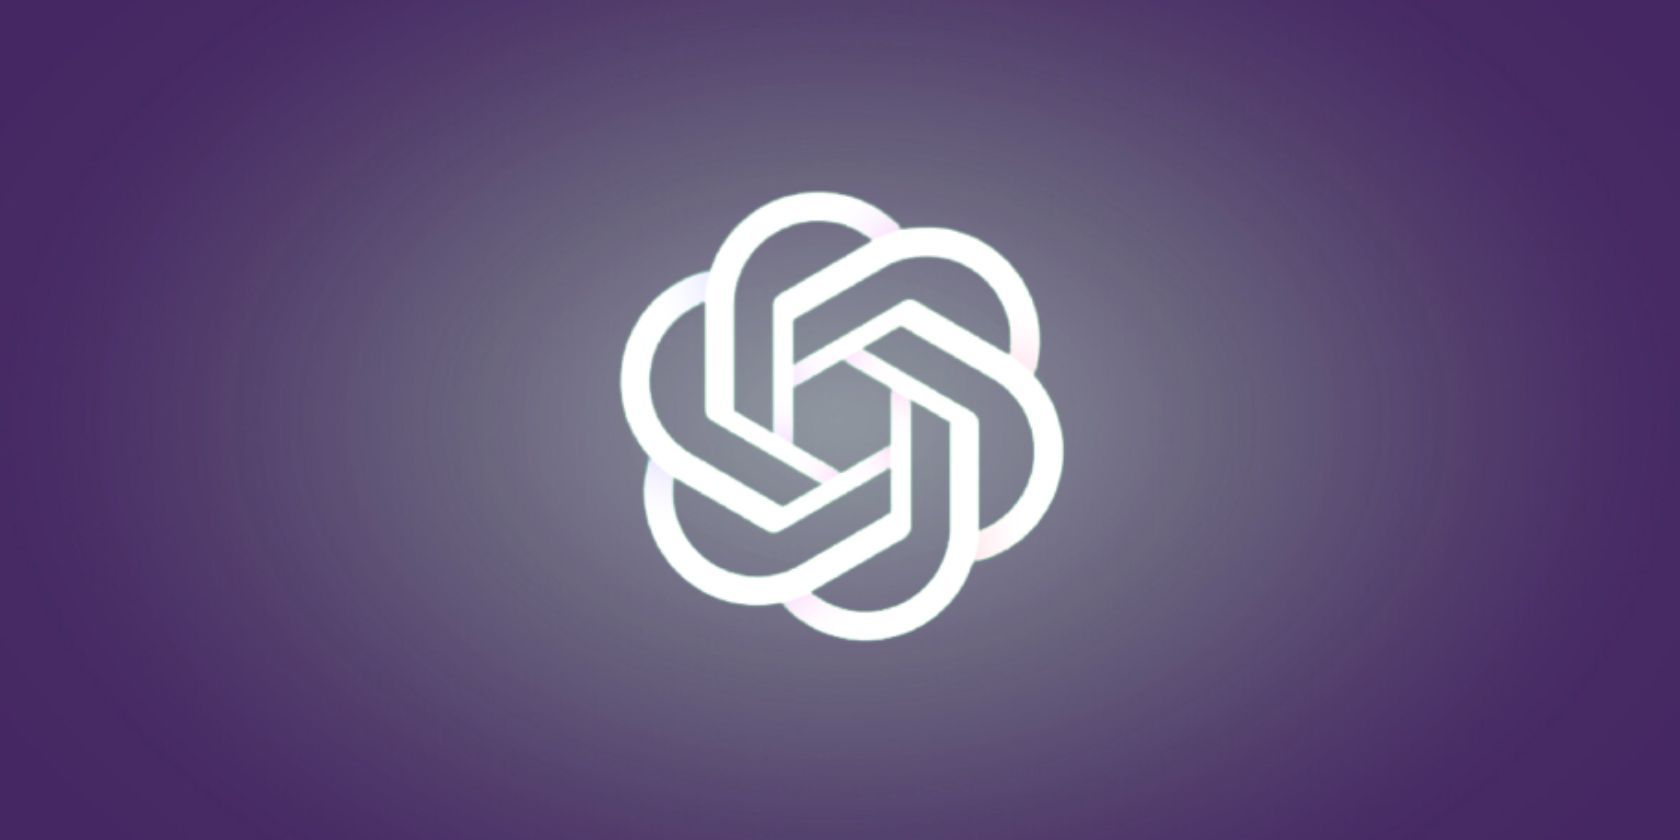 ChatGPT logo on purple background 